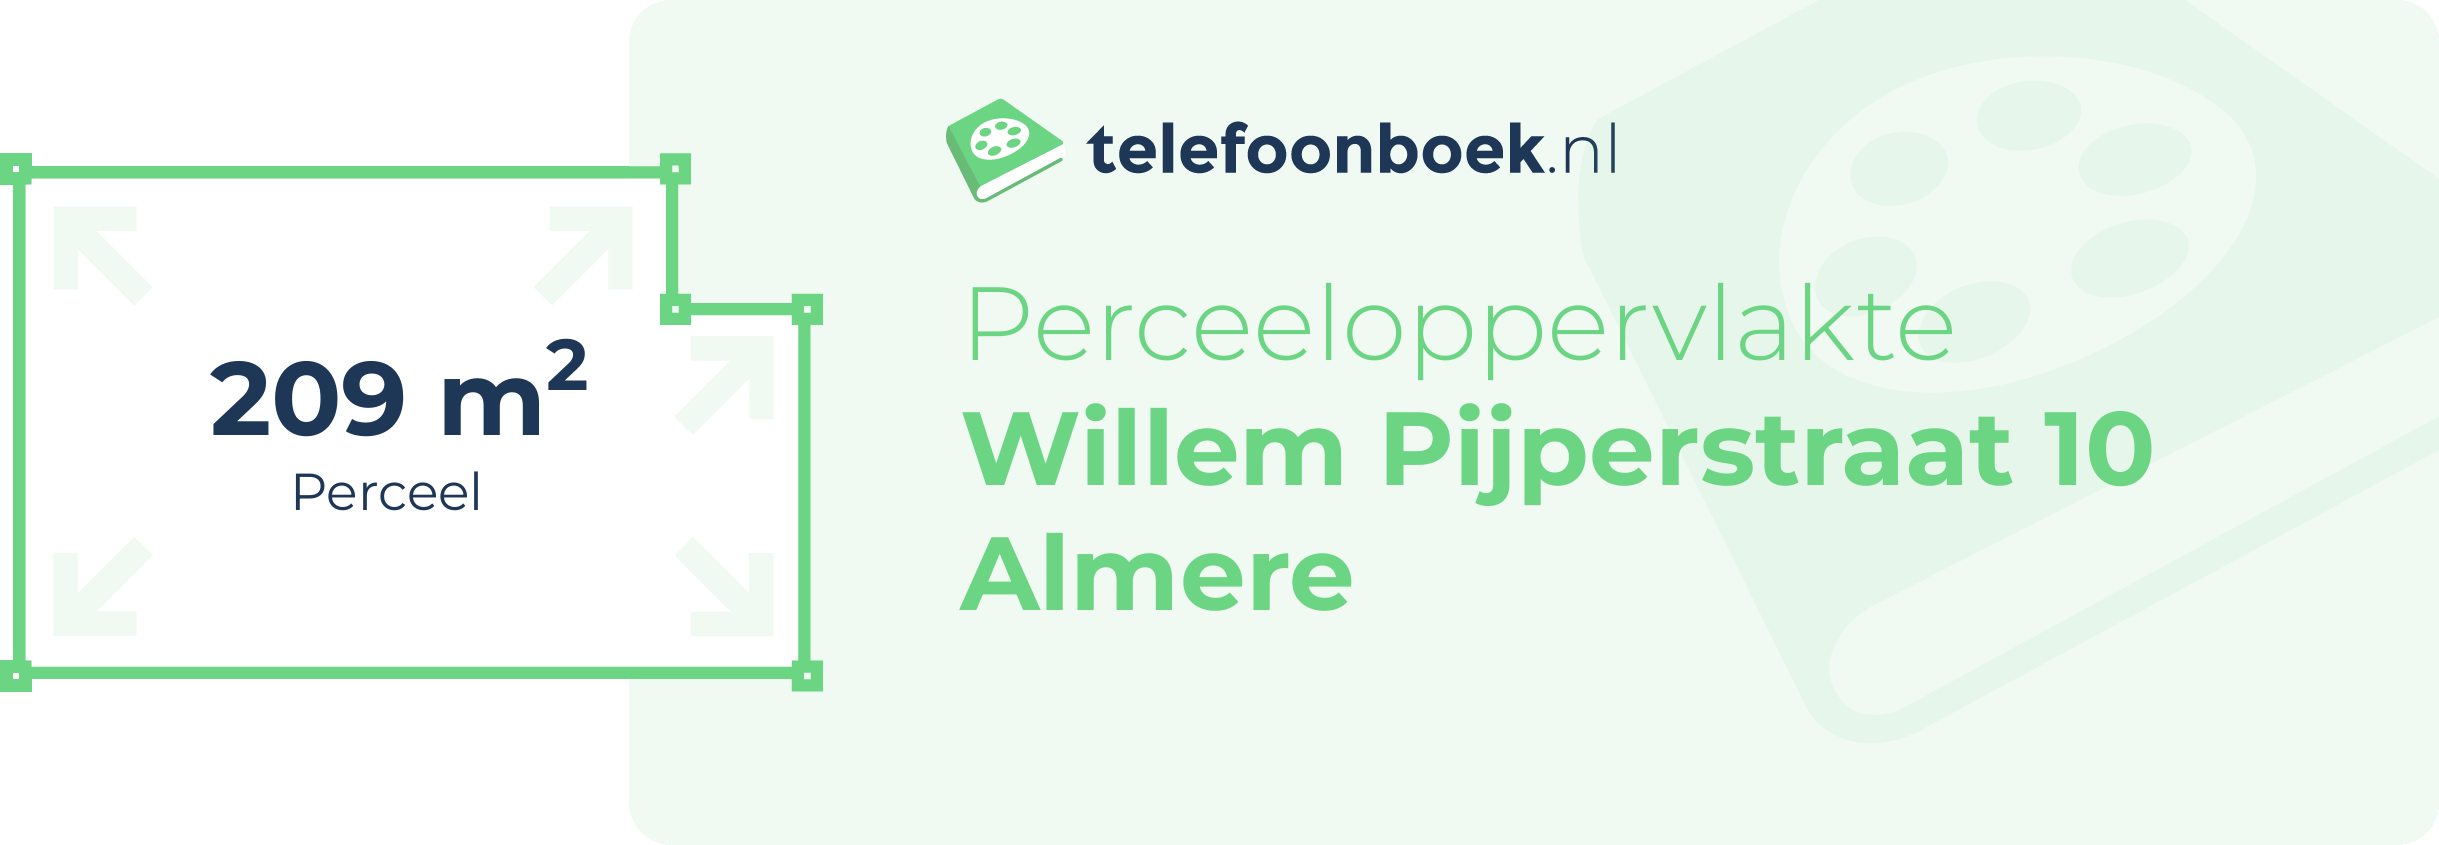 Perceeloppervlakte Willem Pijperstraat 10 Almere